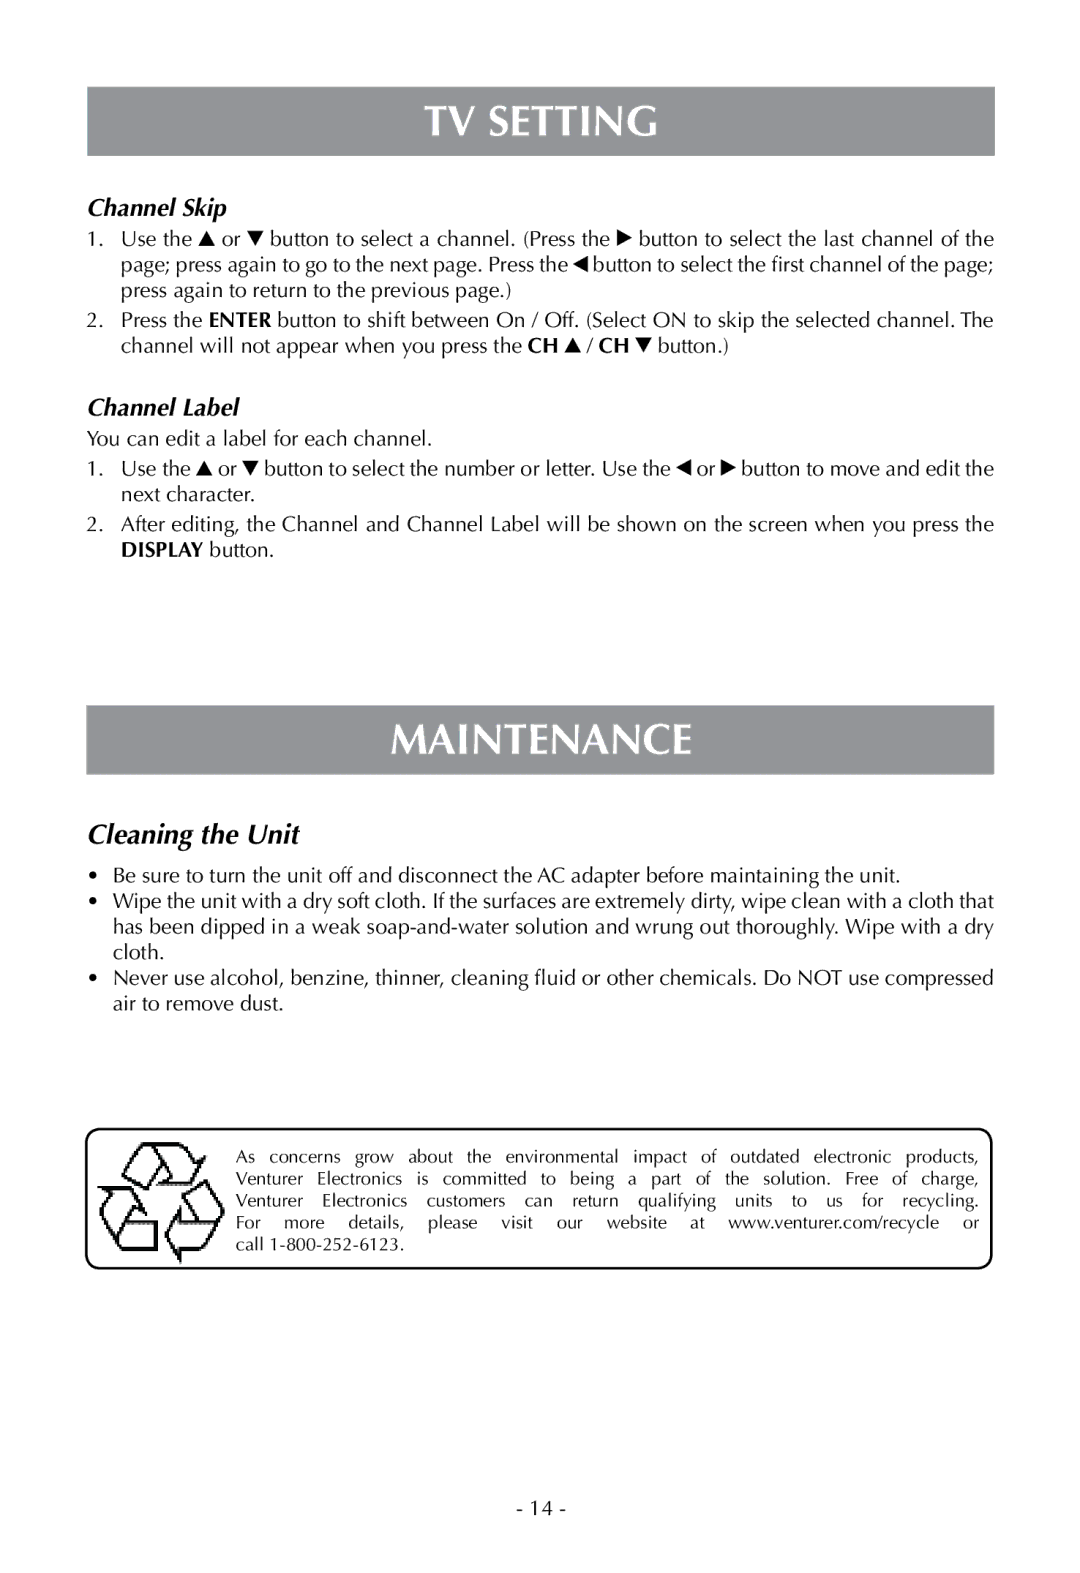 Venturer PLV16070 instruction manual Maintenance, Cleaning the Unit 